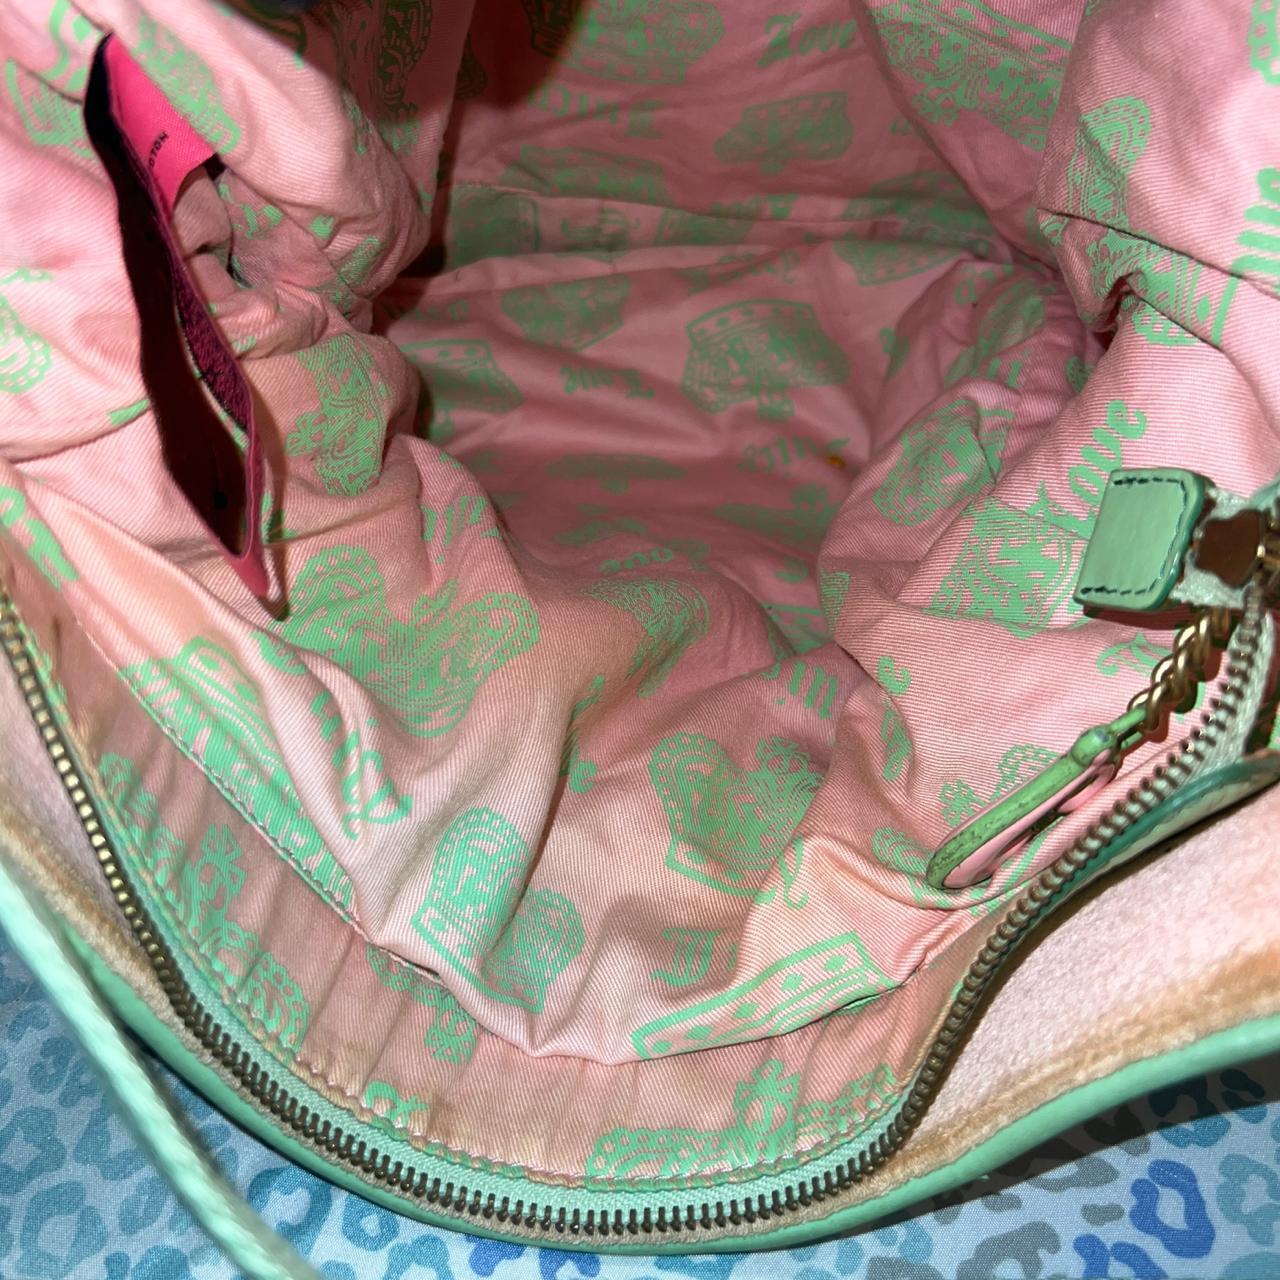 HOT PINK DEREON BAG ✨ hot pink or fuchsia dereon bag - Depop